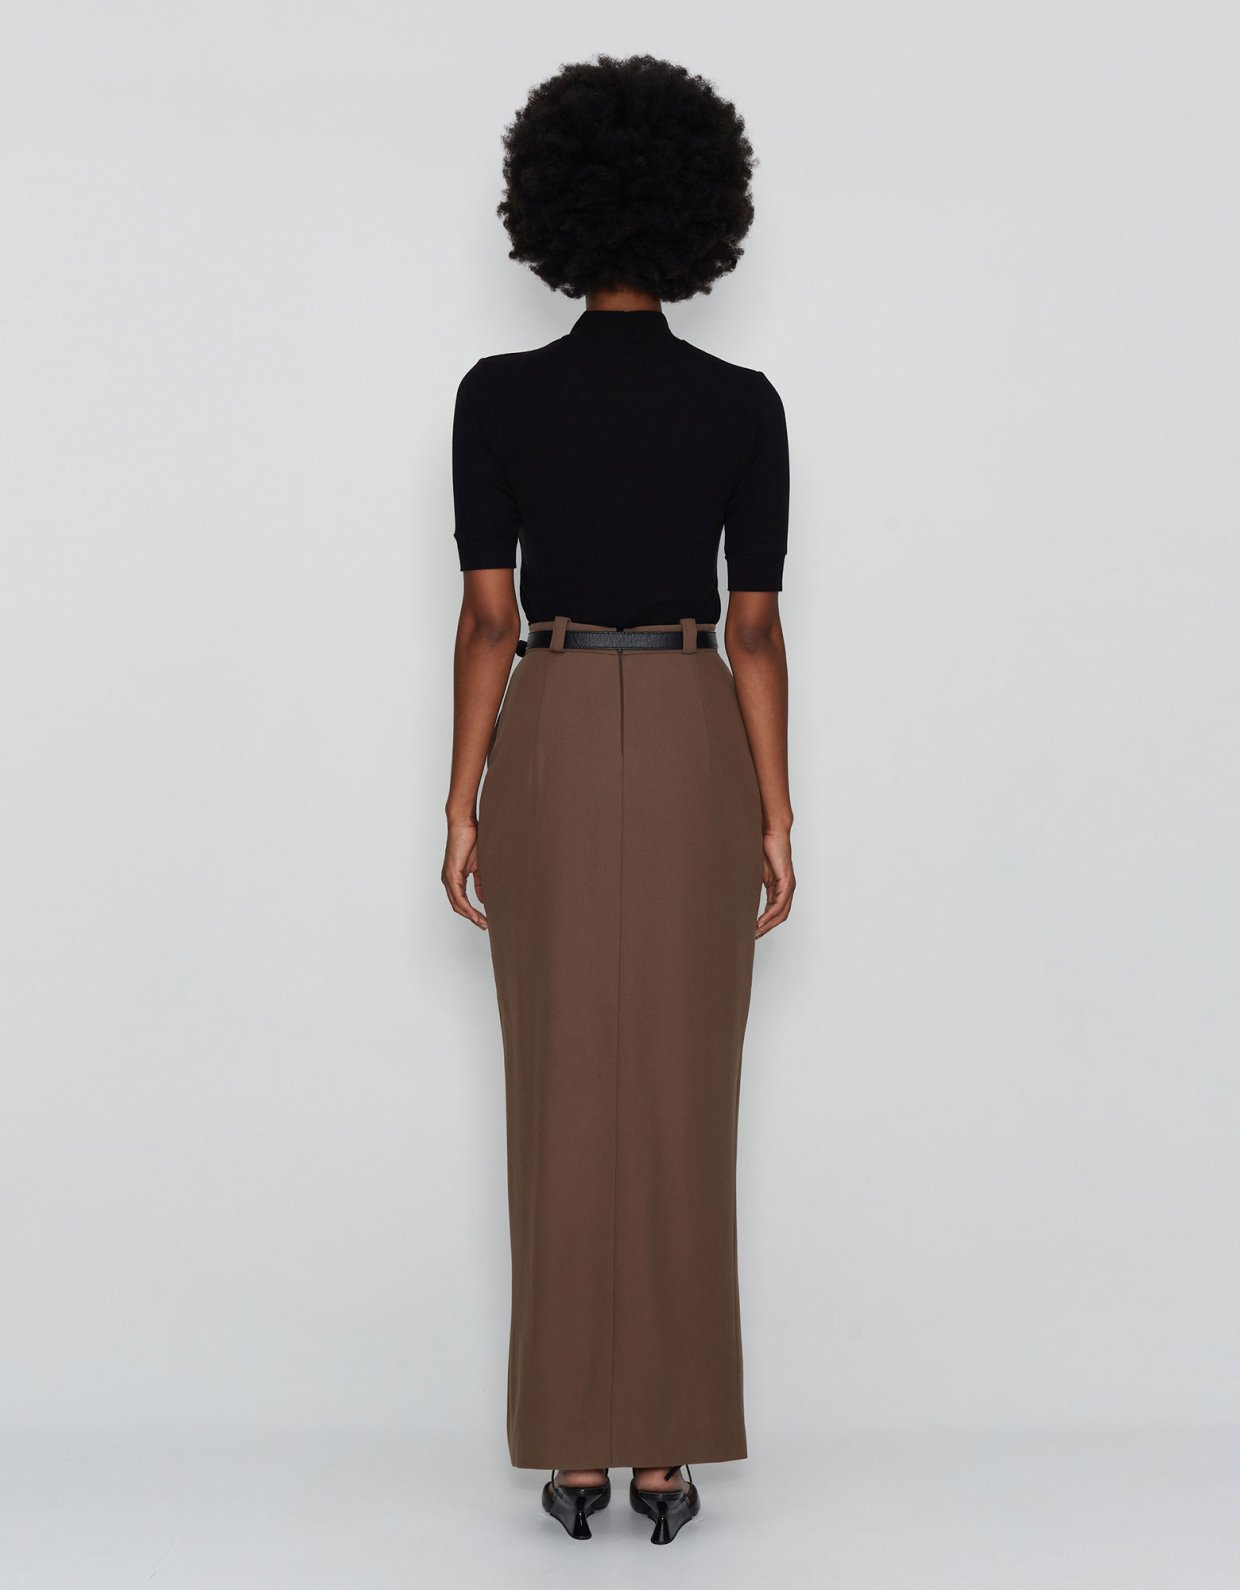 Nadia Rapti Terra poem skirt brown